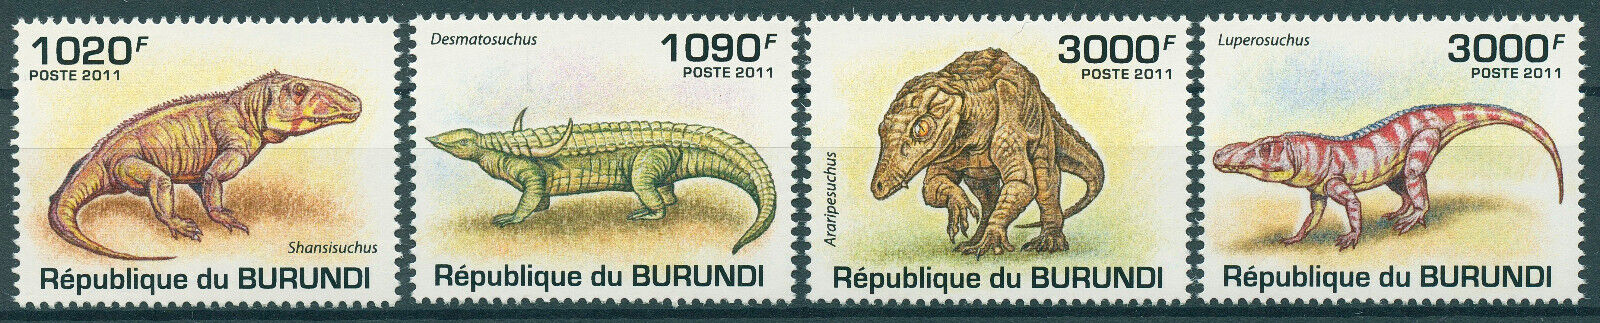 Burundi 2011 MNH Prehistoric Animals Stamps Crocodiles Reptiles 4v Set